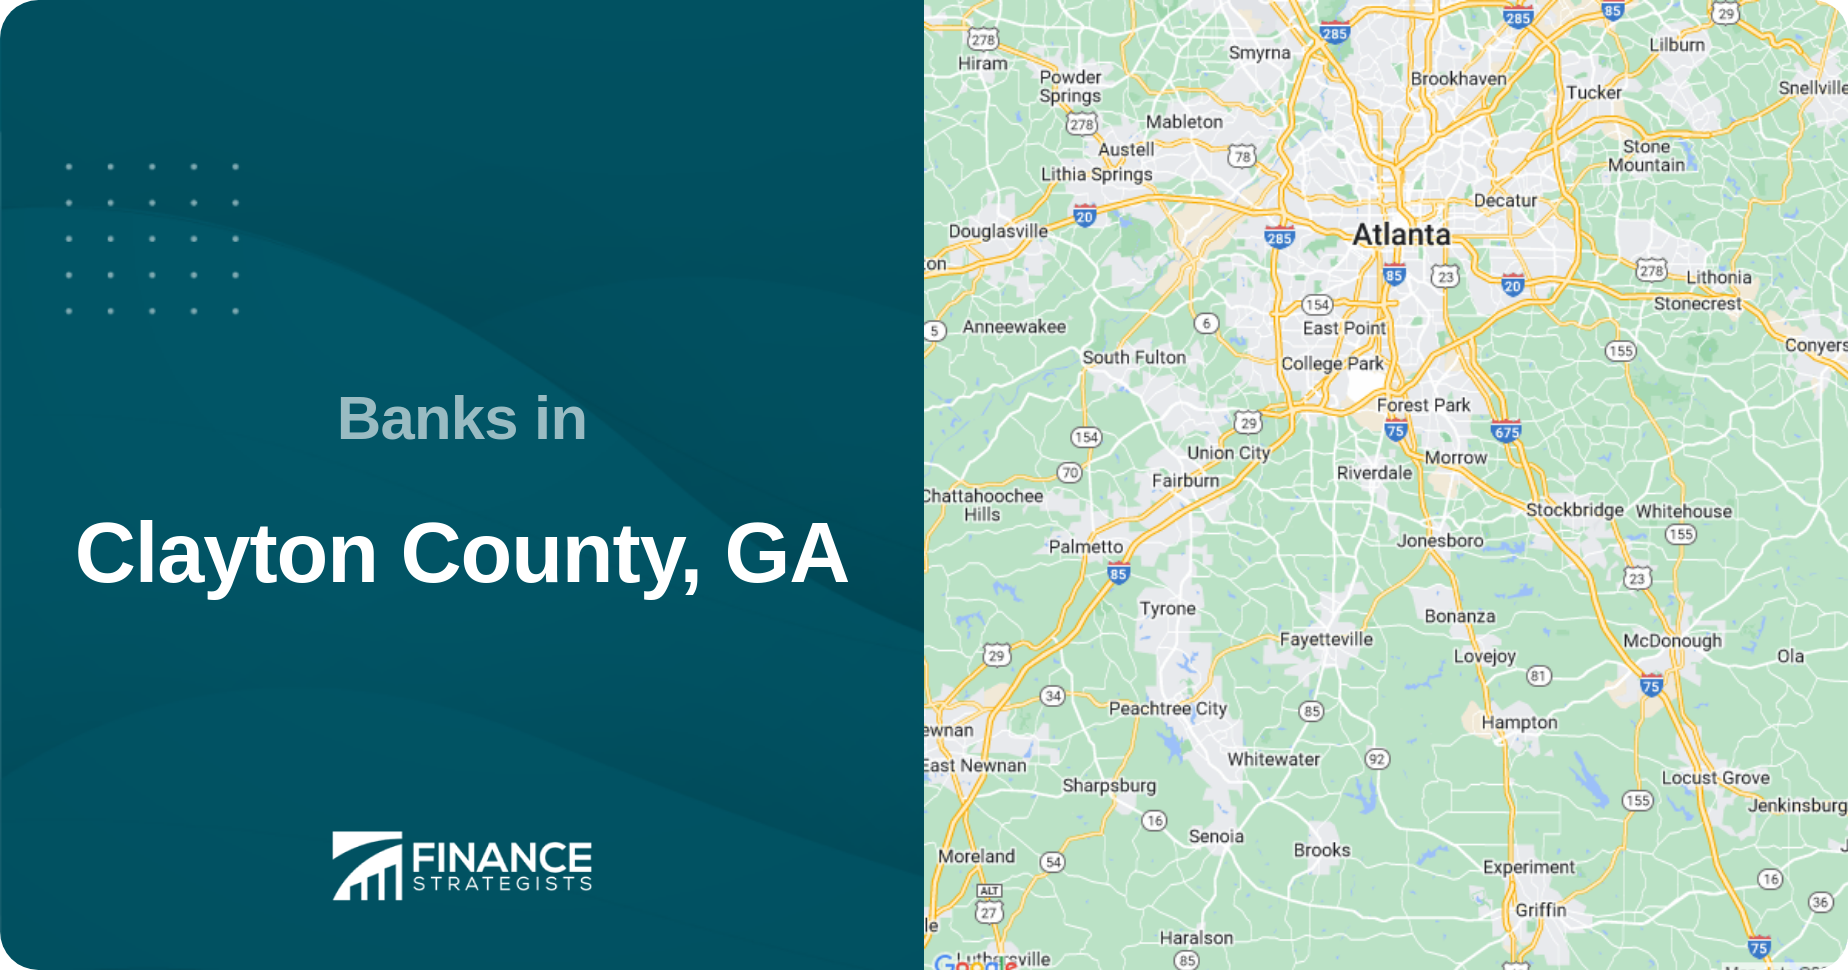 Banks in Clayton County, GA